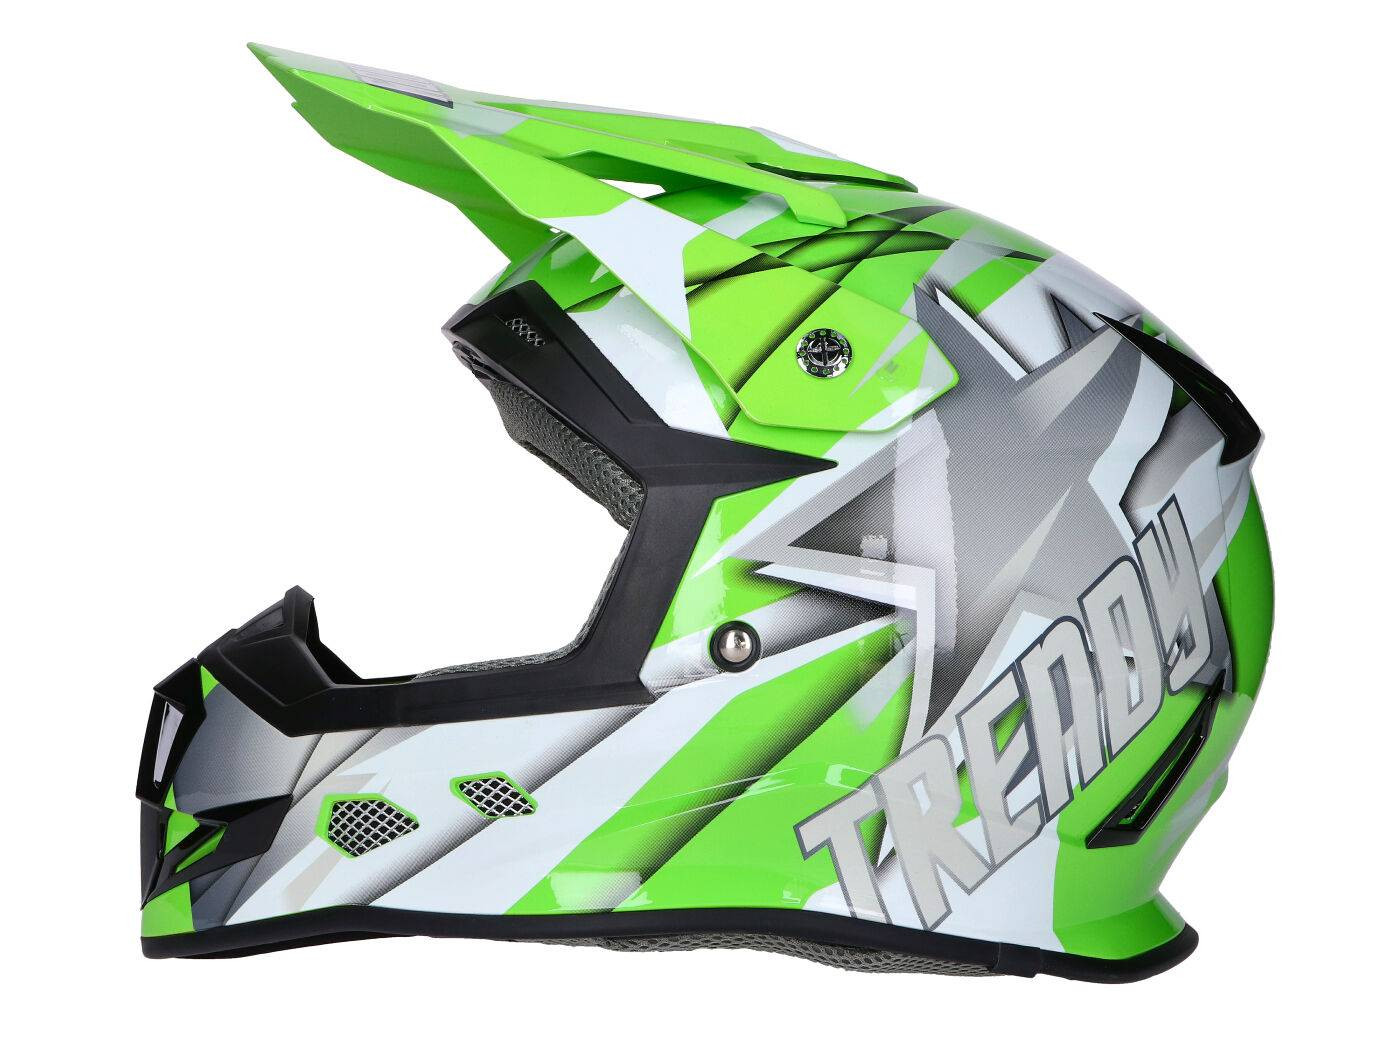 Sisak Motocross Trendy T-902 Dreamstar fehér / zöld - M méret (57-58)